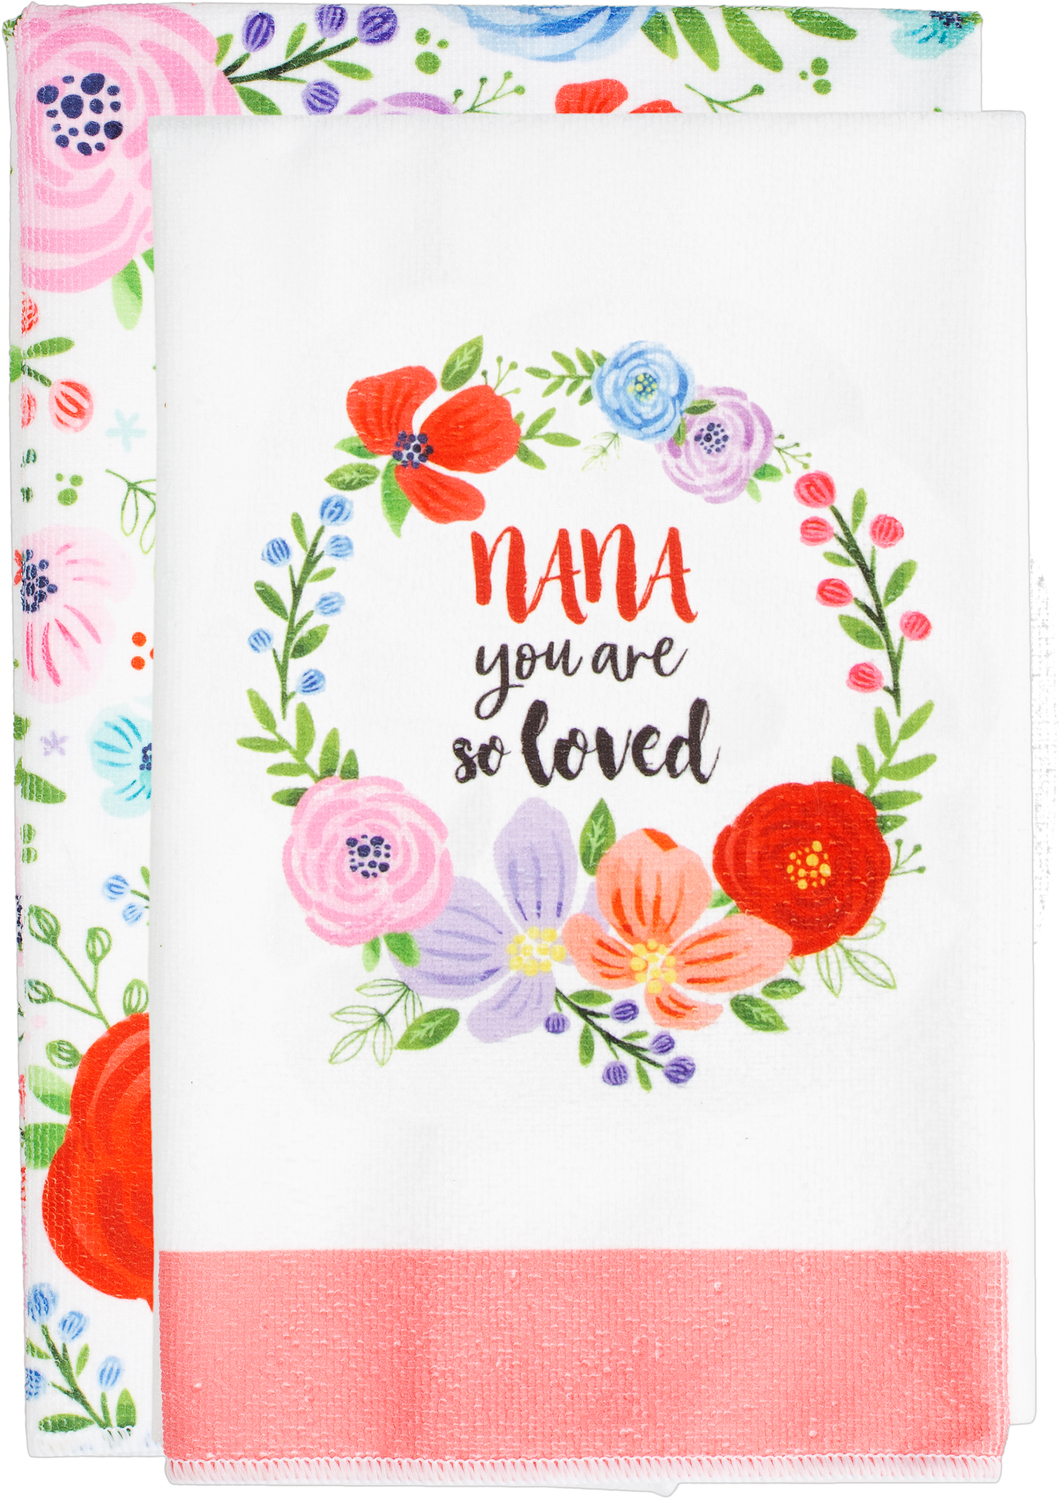 Nana by Bunches of Love - Nana - Tea Towel Gift Set
(2 - 19.75" x 27.5")